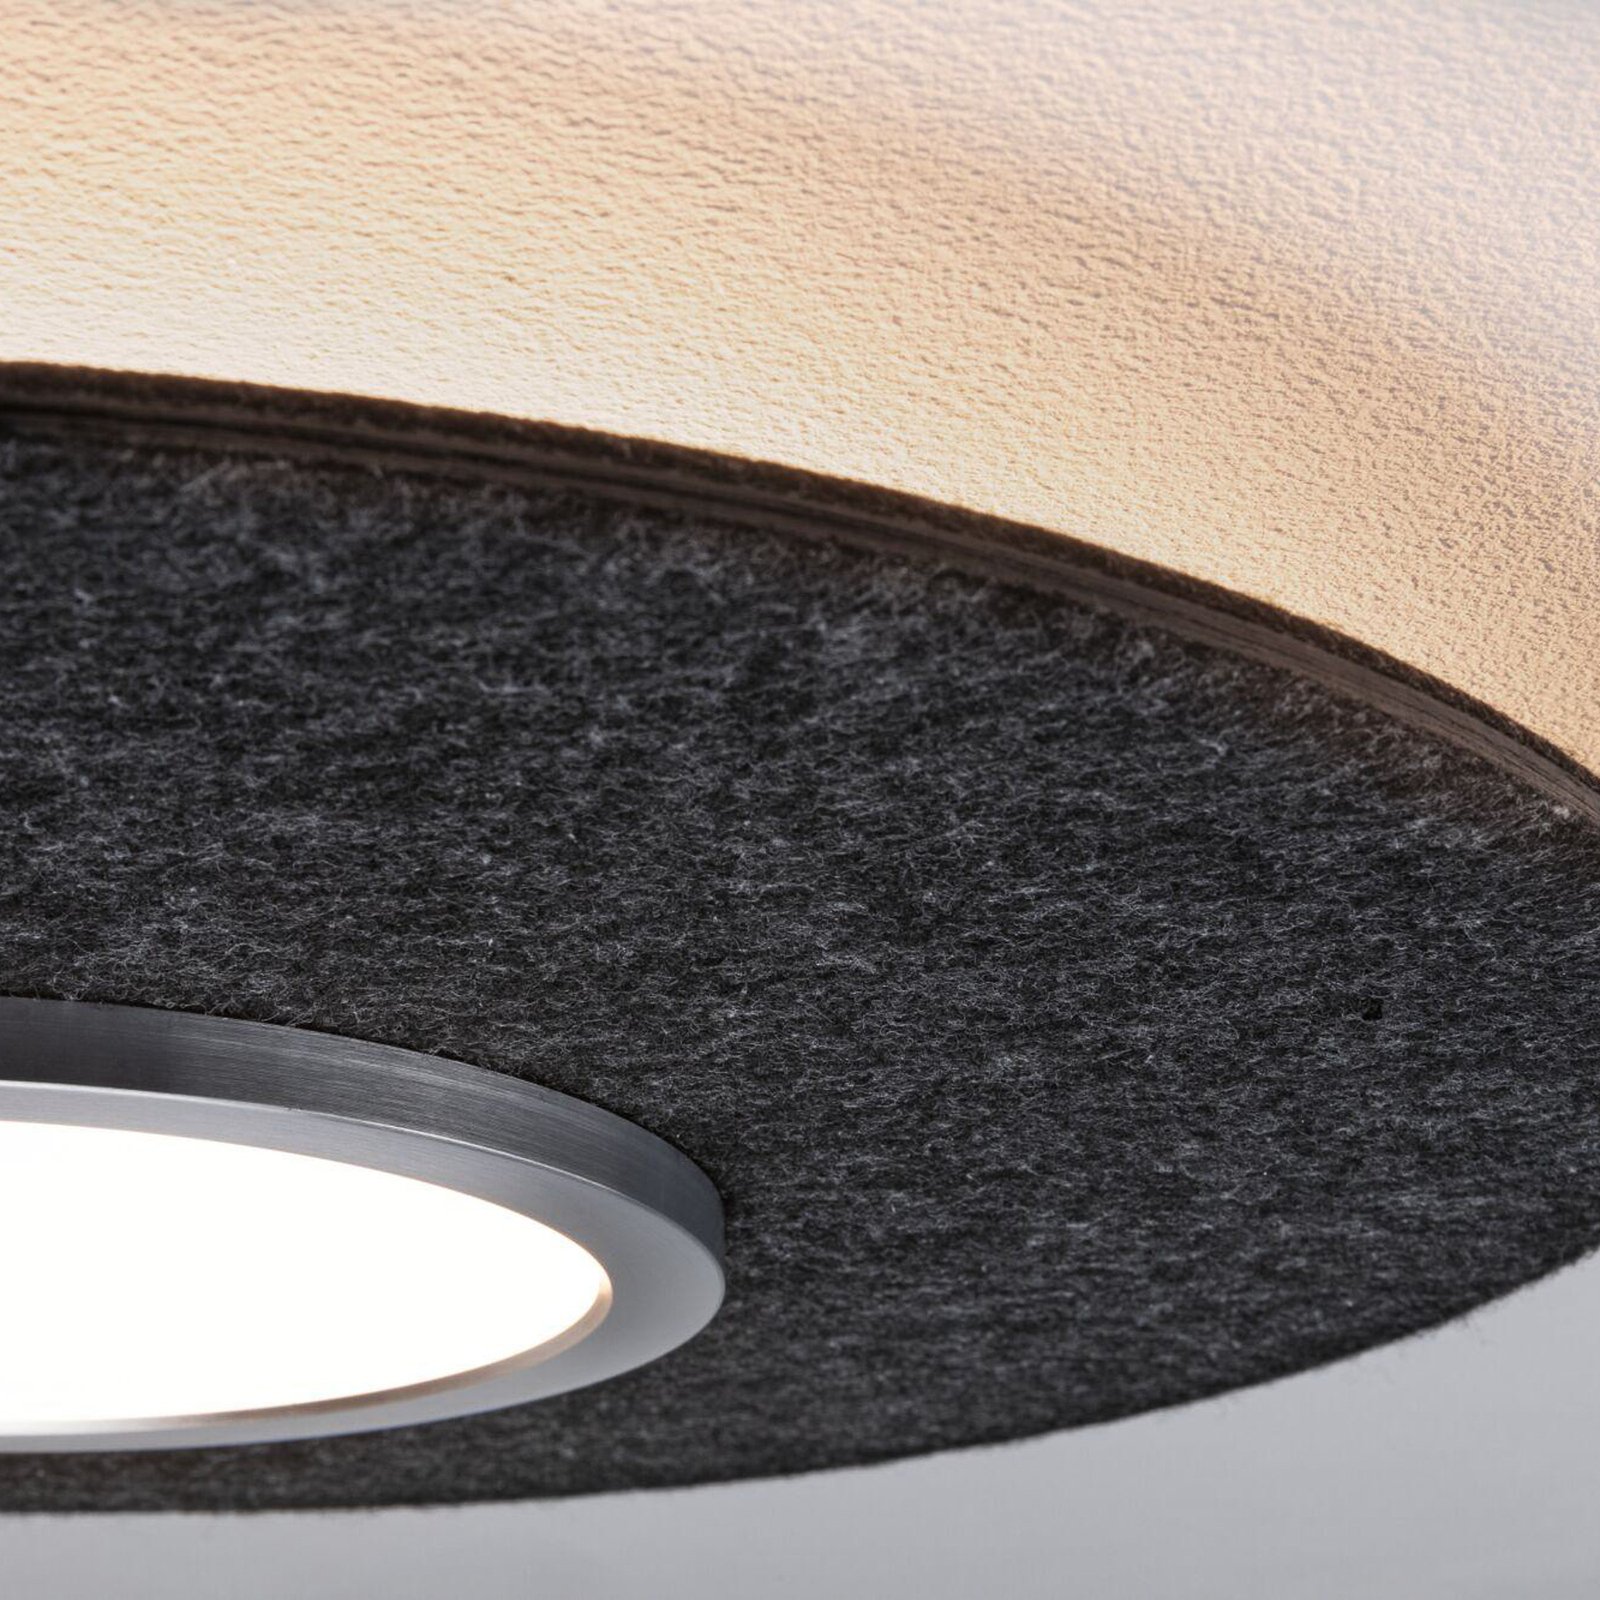 Paulmann LED φωτιστικό οροφής Tulga, ανθρακί, τσόχα, 3-step-dim